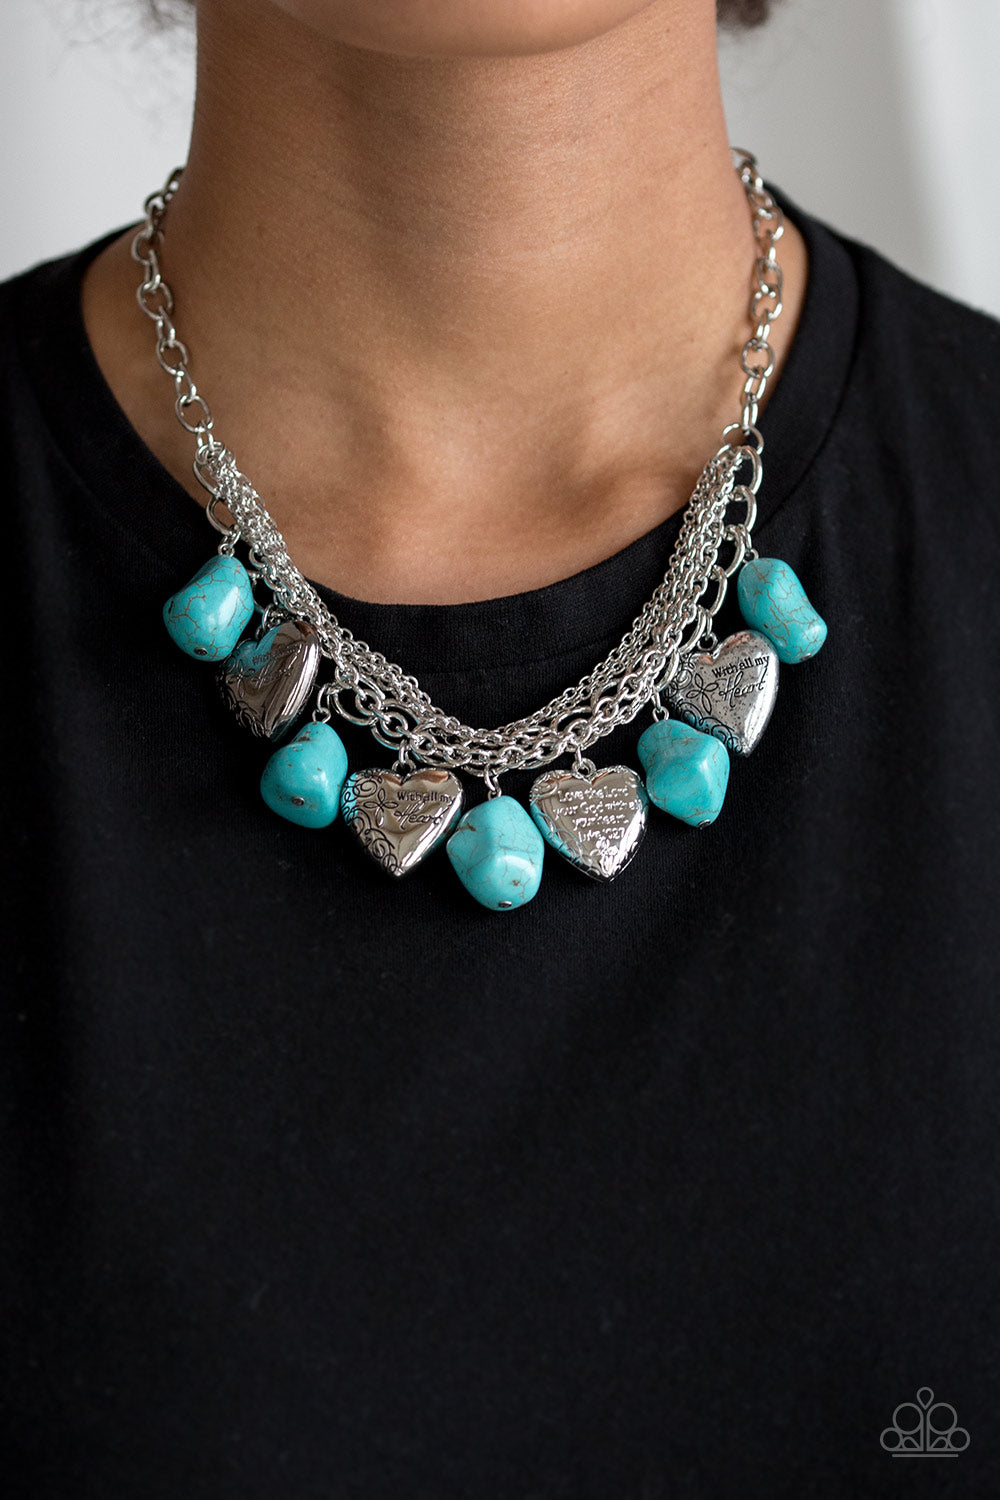 Change Of Heart - Blue necklace set